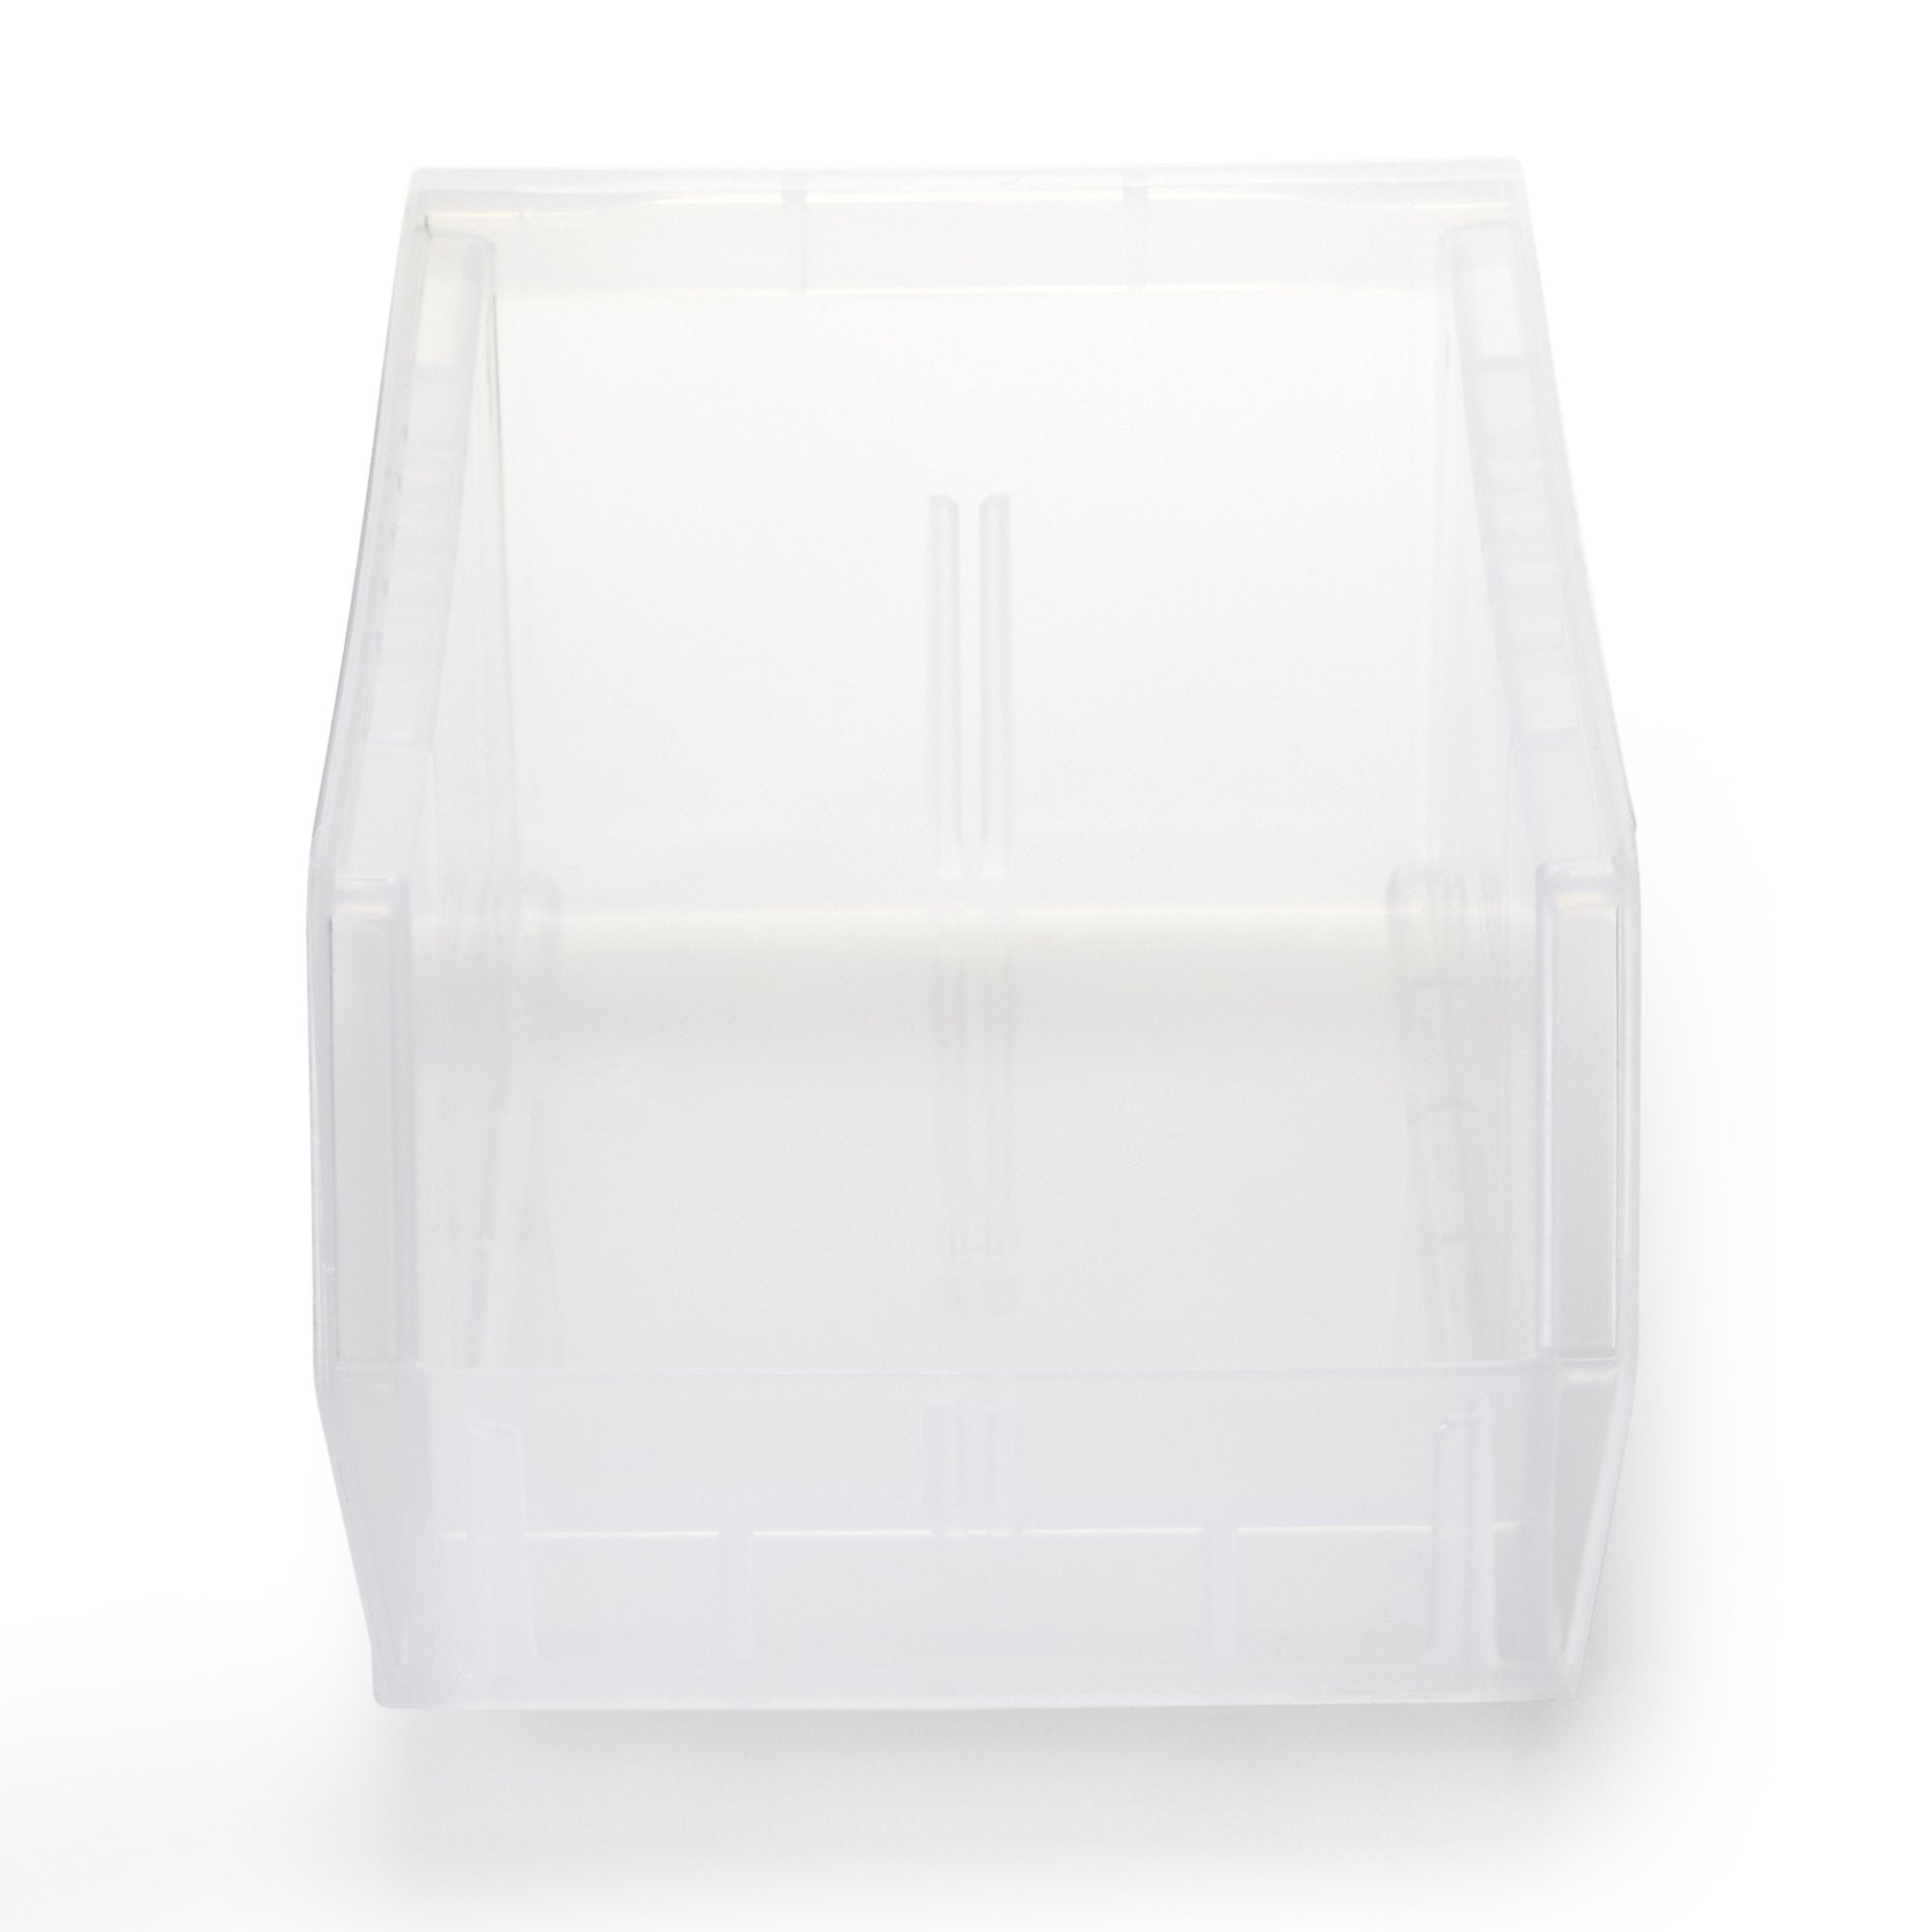 Storage Bin AkroBins Clear Plastic 3 X 4-1/8 X 7-3/8 Inch